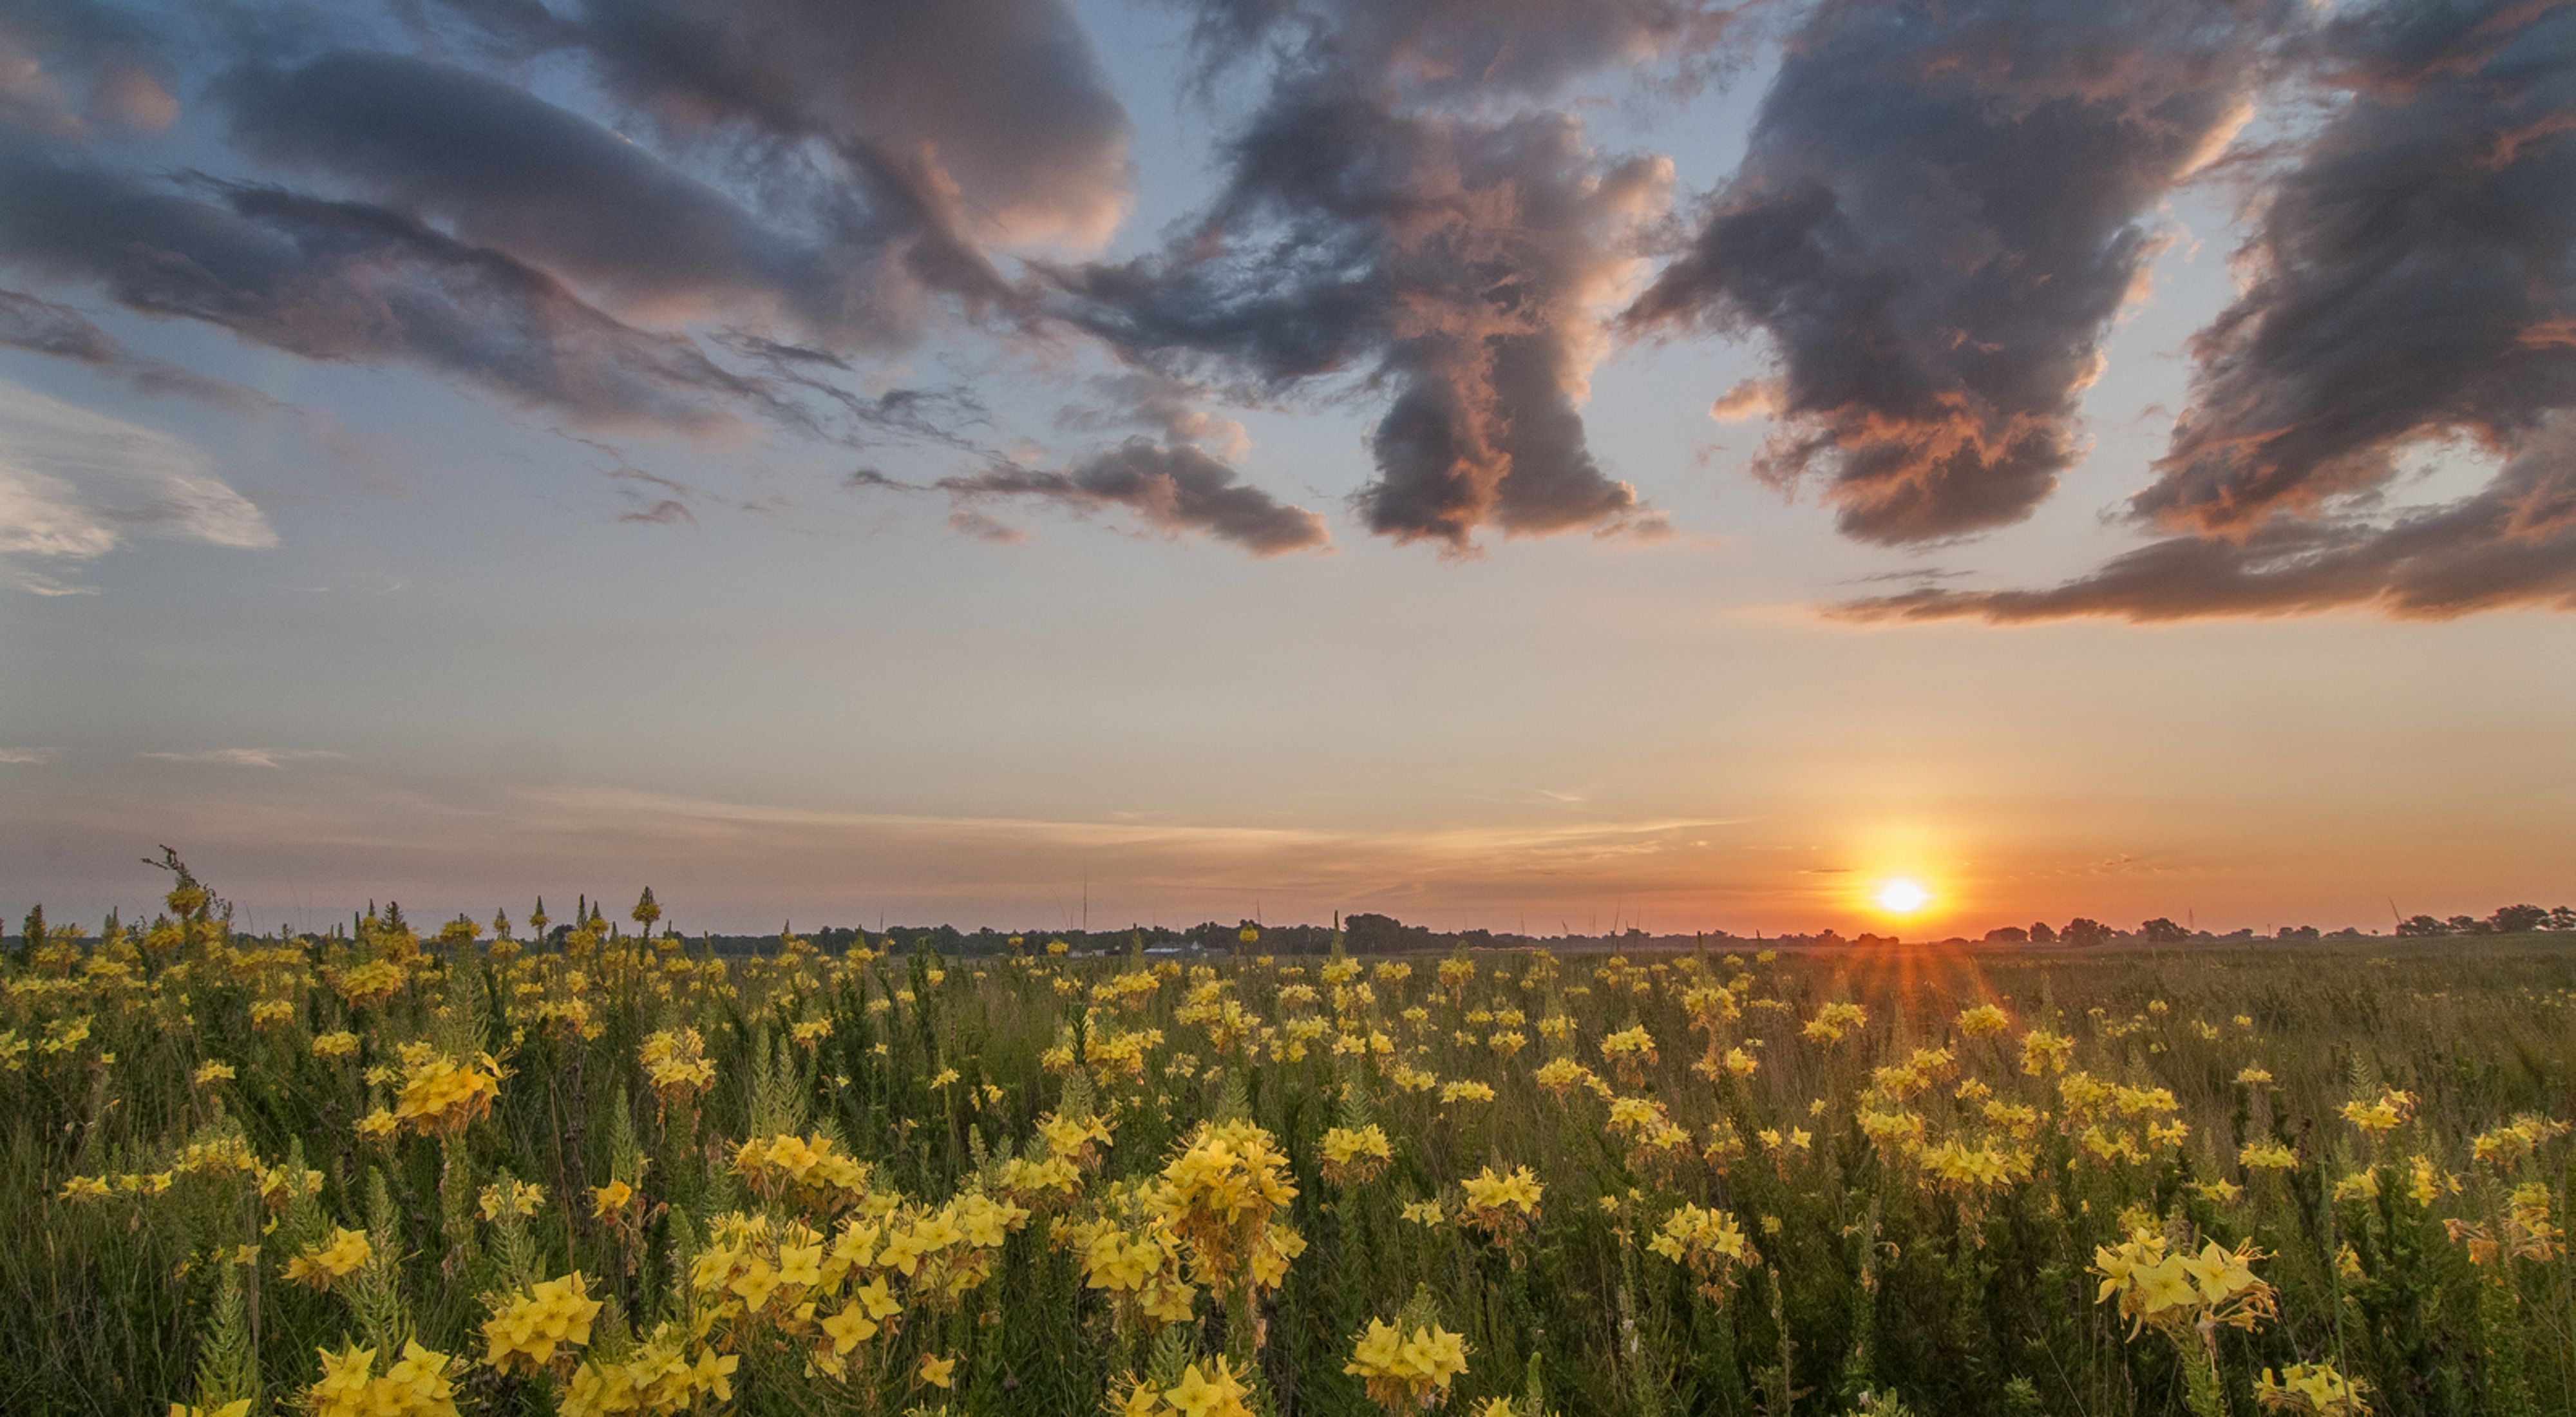 Wildflowers decorate a prairie landscape at sunrise.